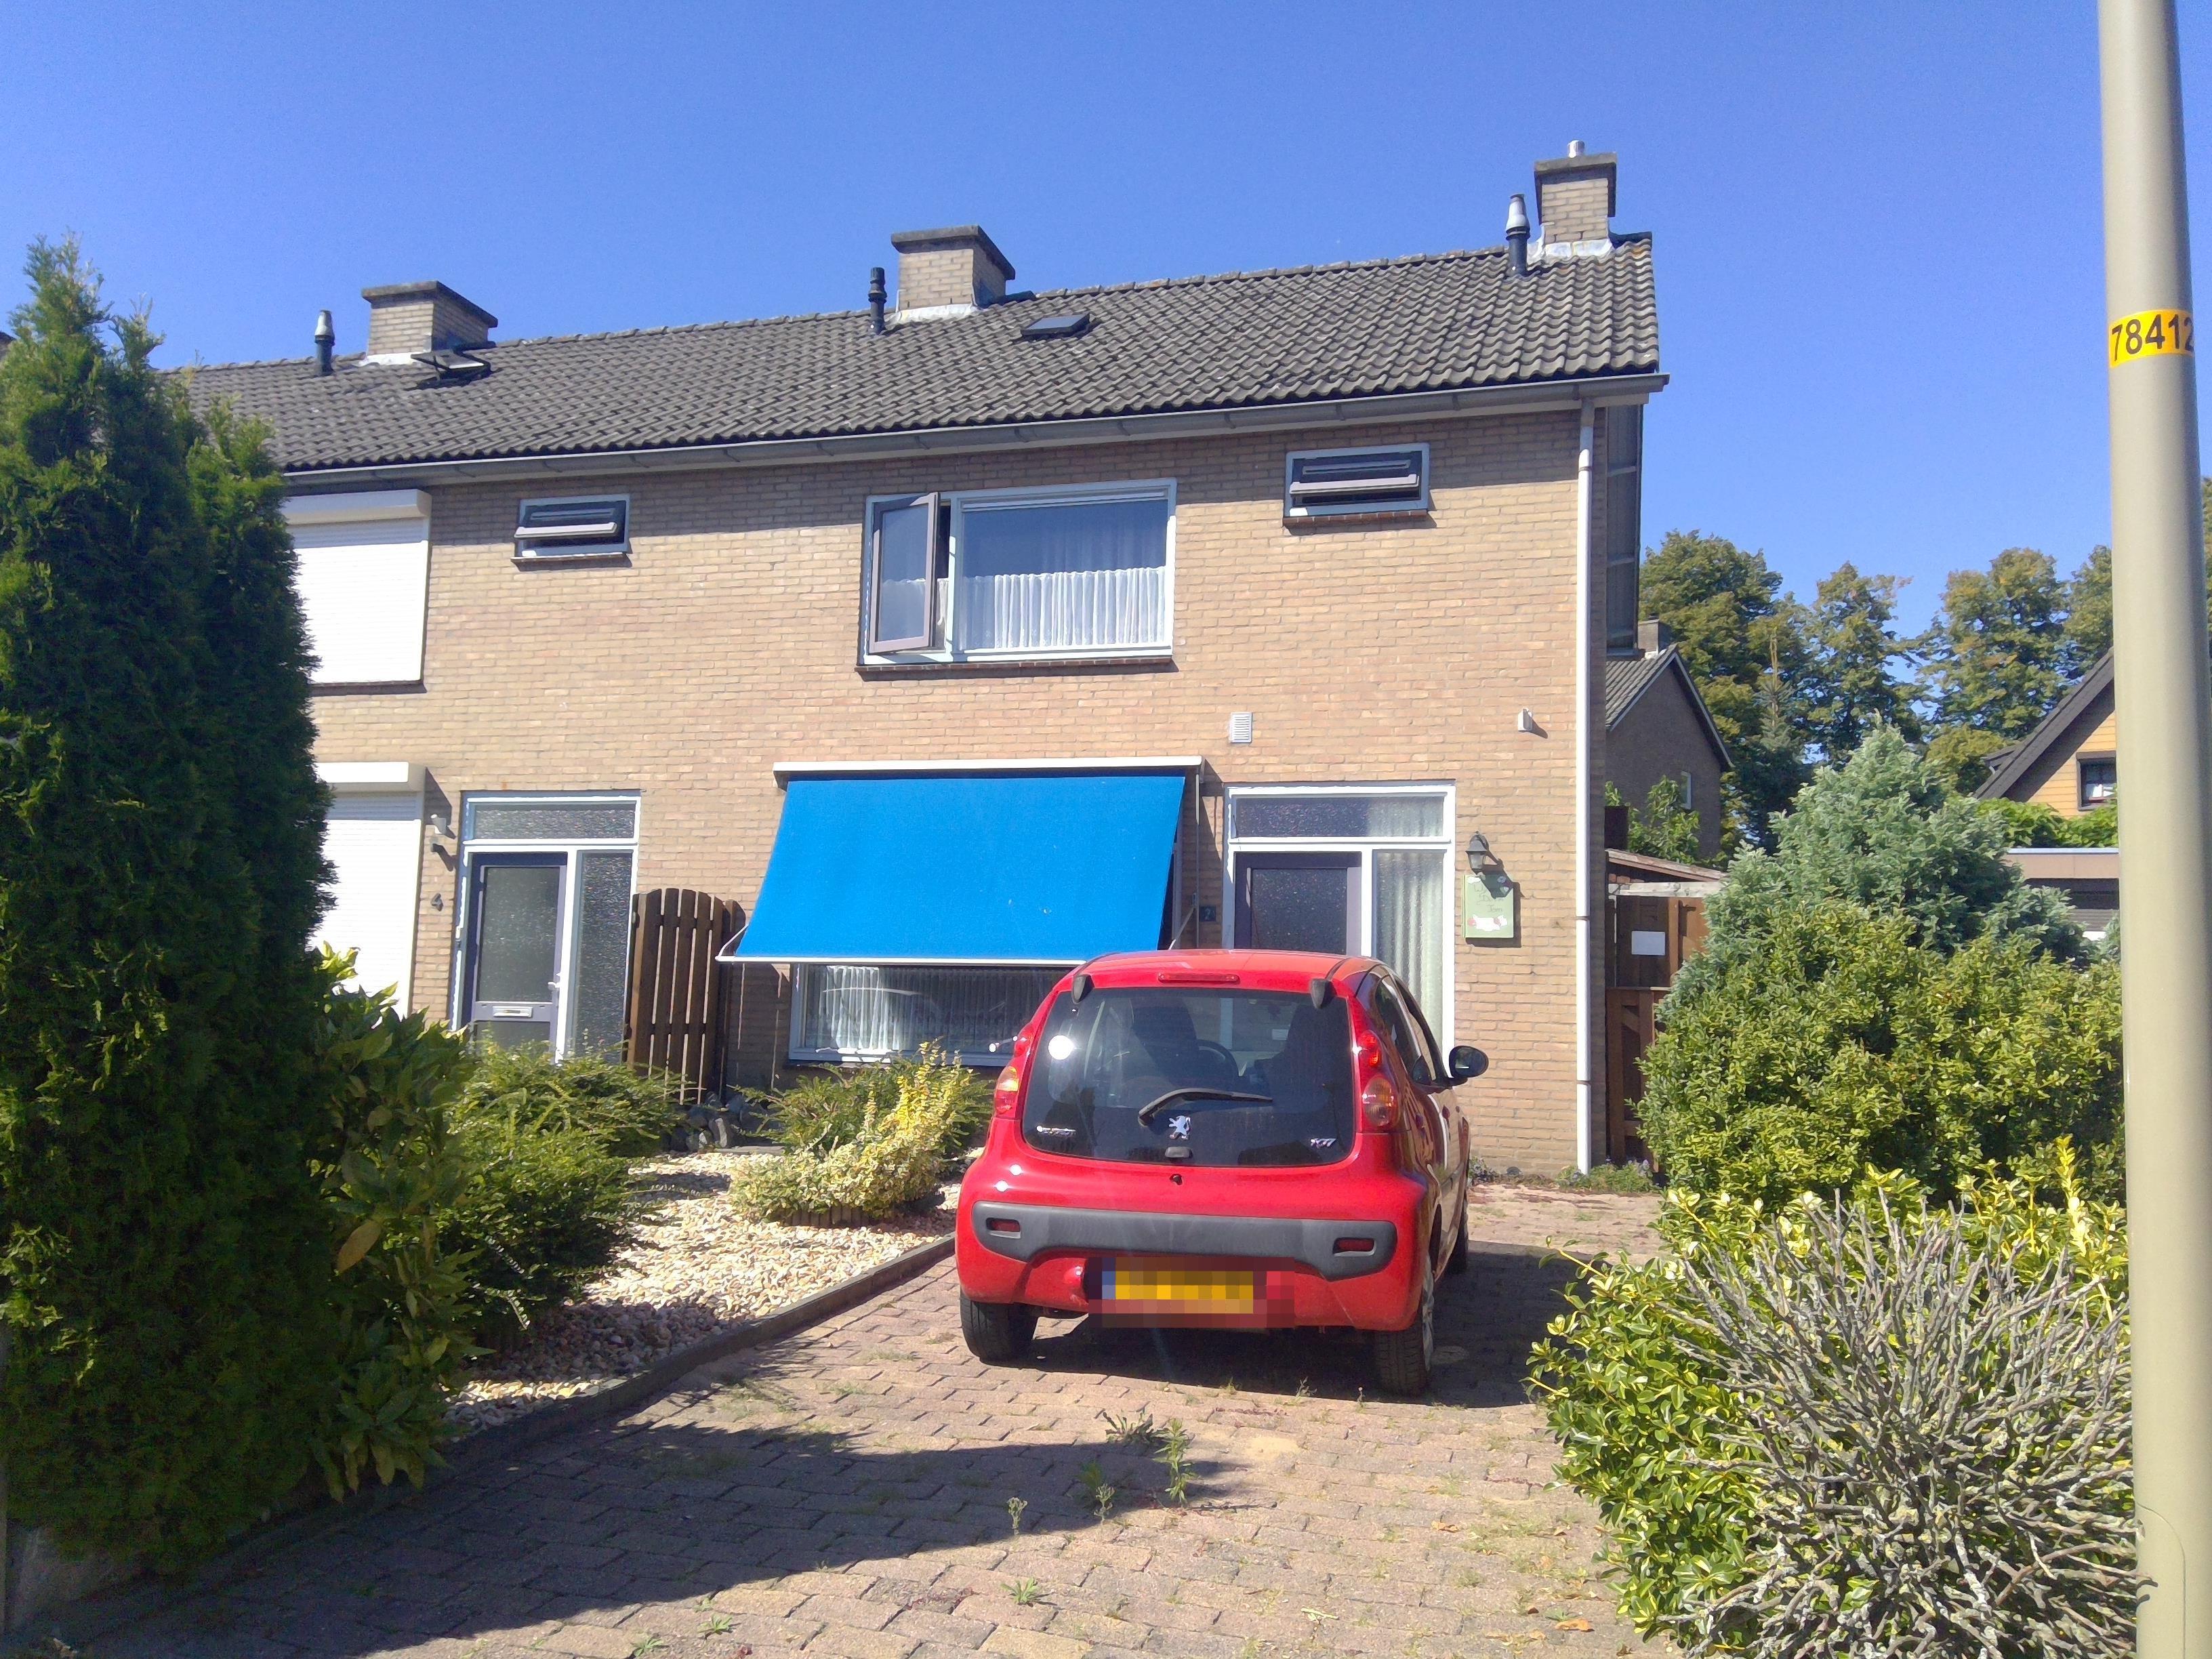 Ericastraat 2, 6561 VZ Groesbeek, Nederland